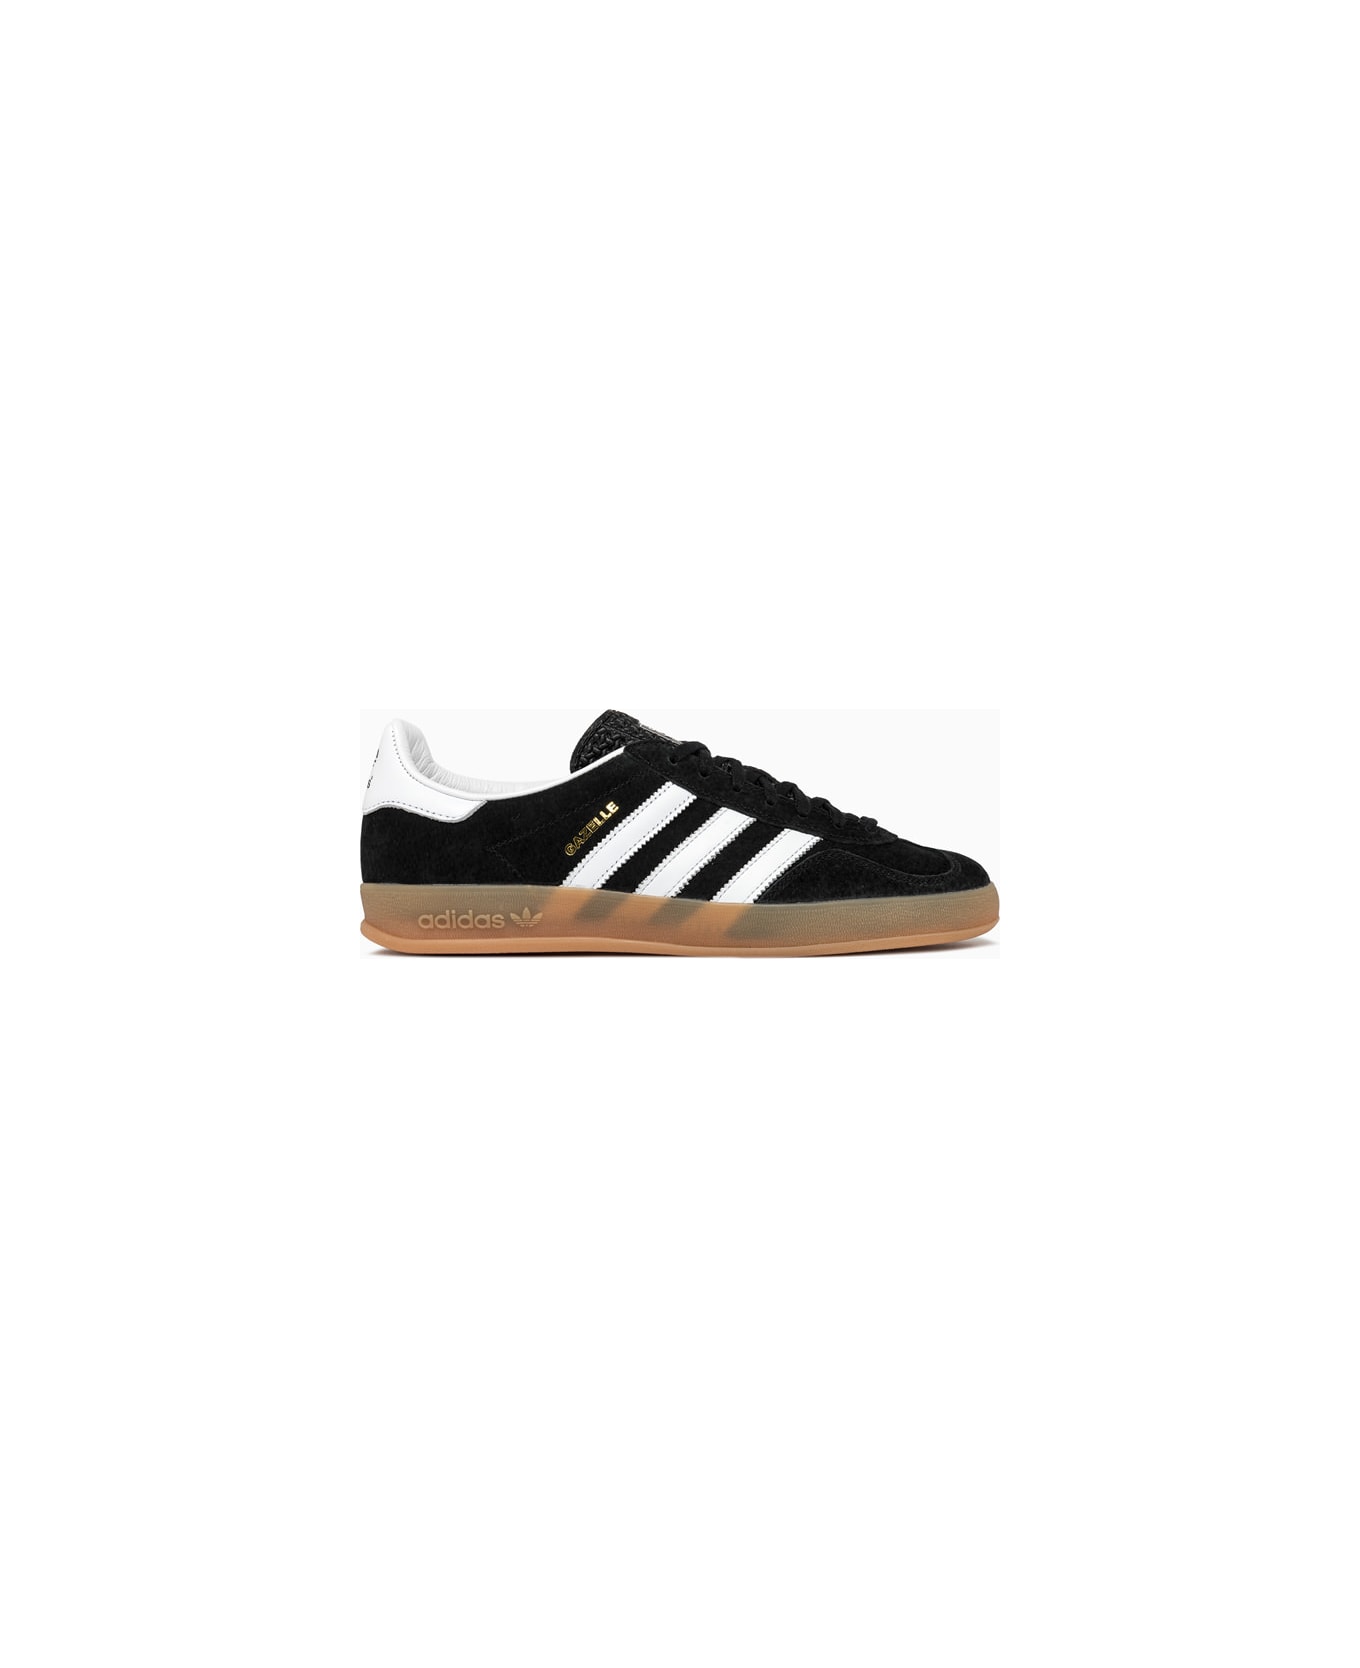 Adidas Originals Gazelle Indoor Sneakers H06259 - Cblack/ftwwht/cblack スニーカー